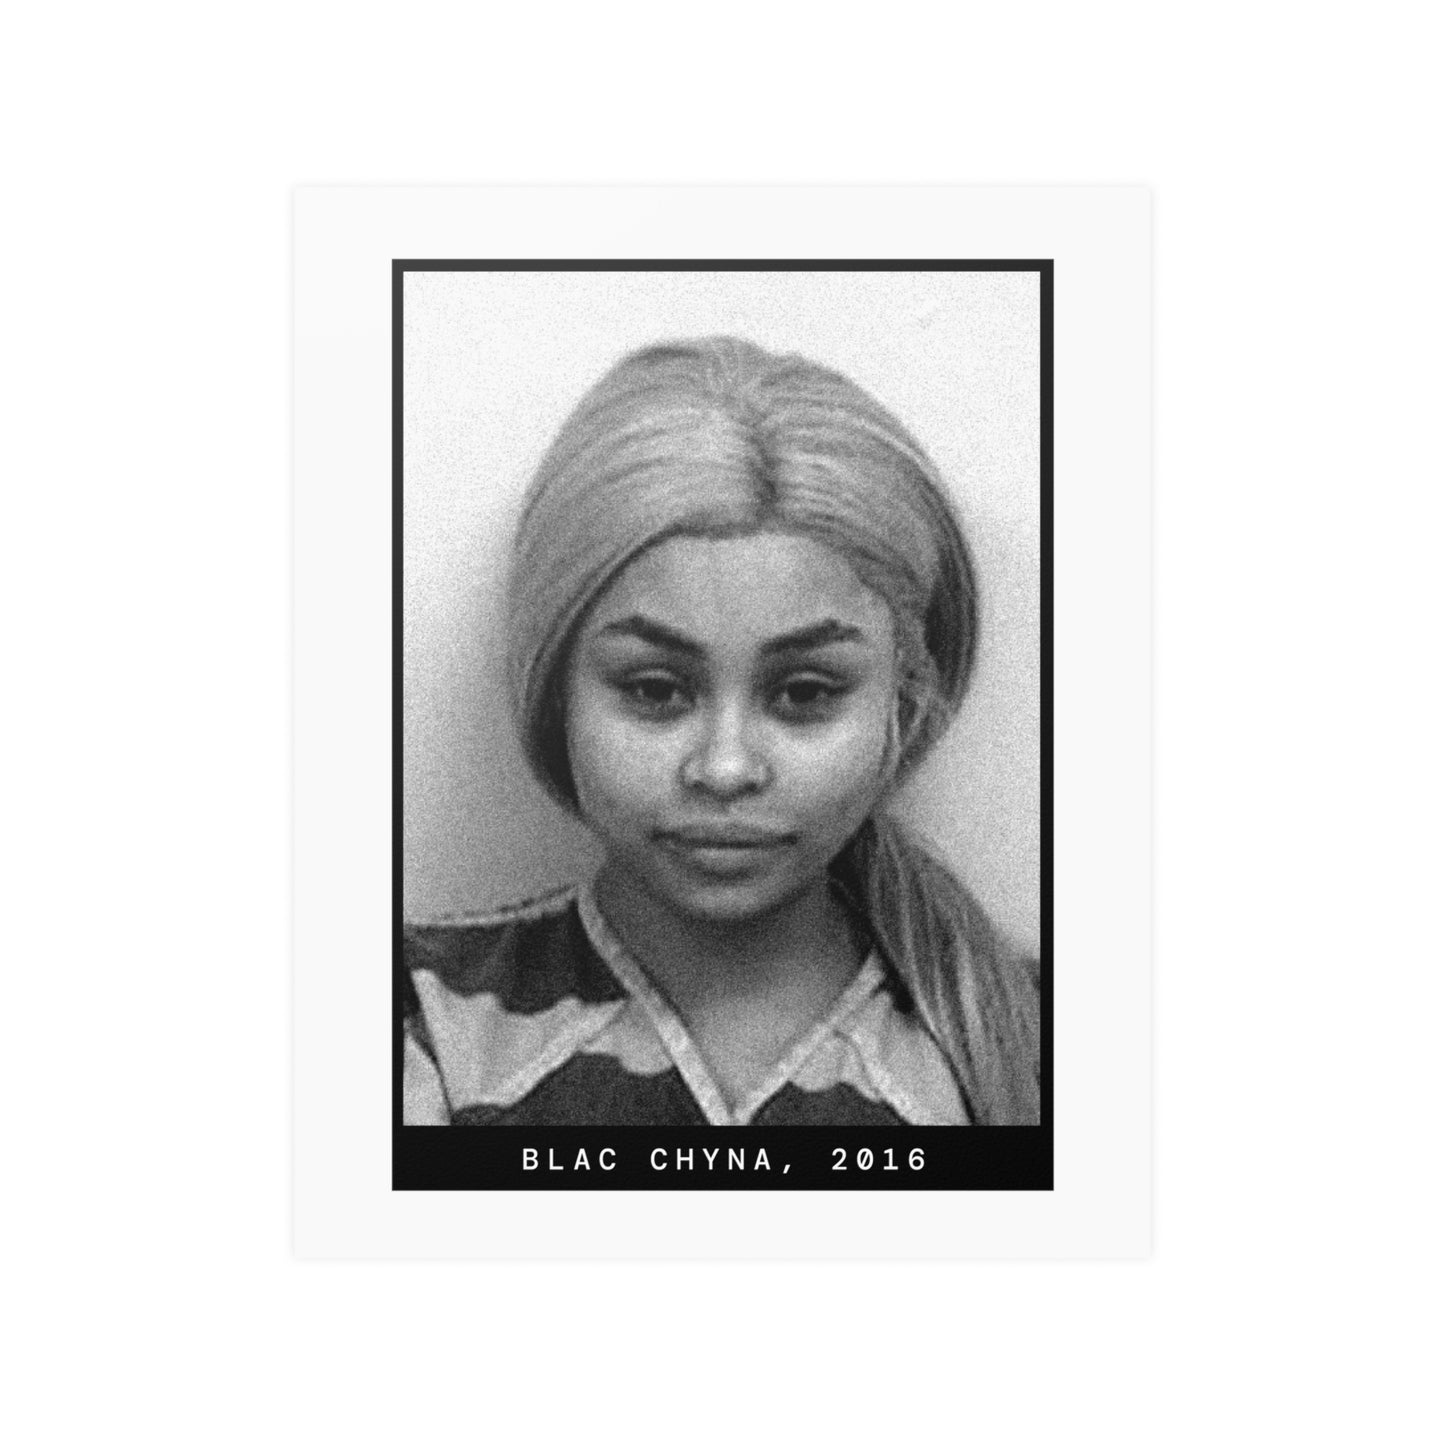 Blac Chyna, 2016 Celebrity Mugshot Poster